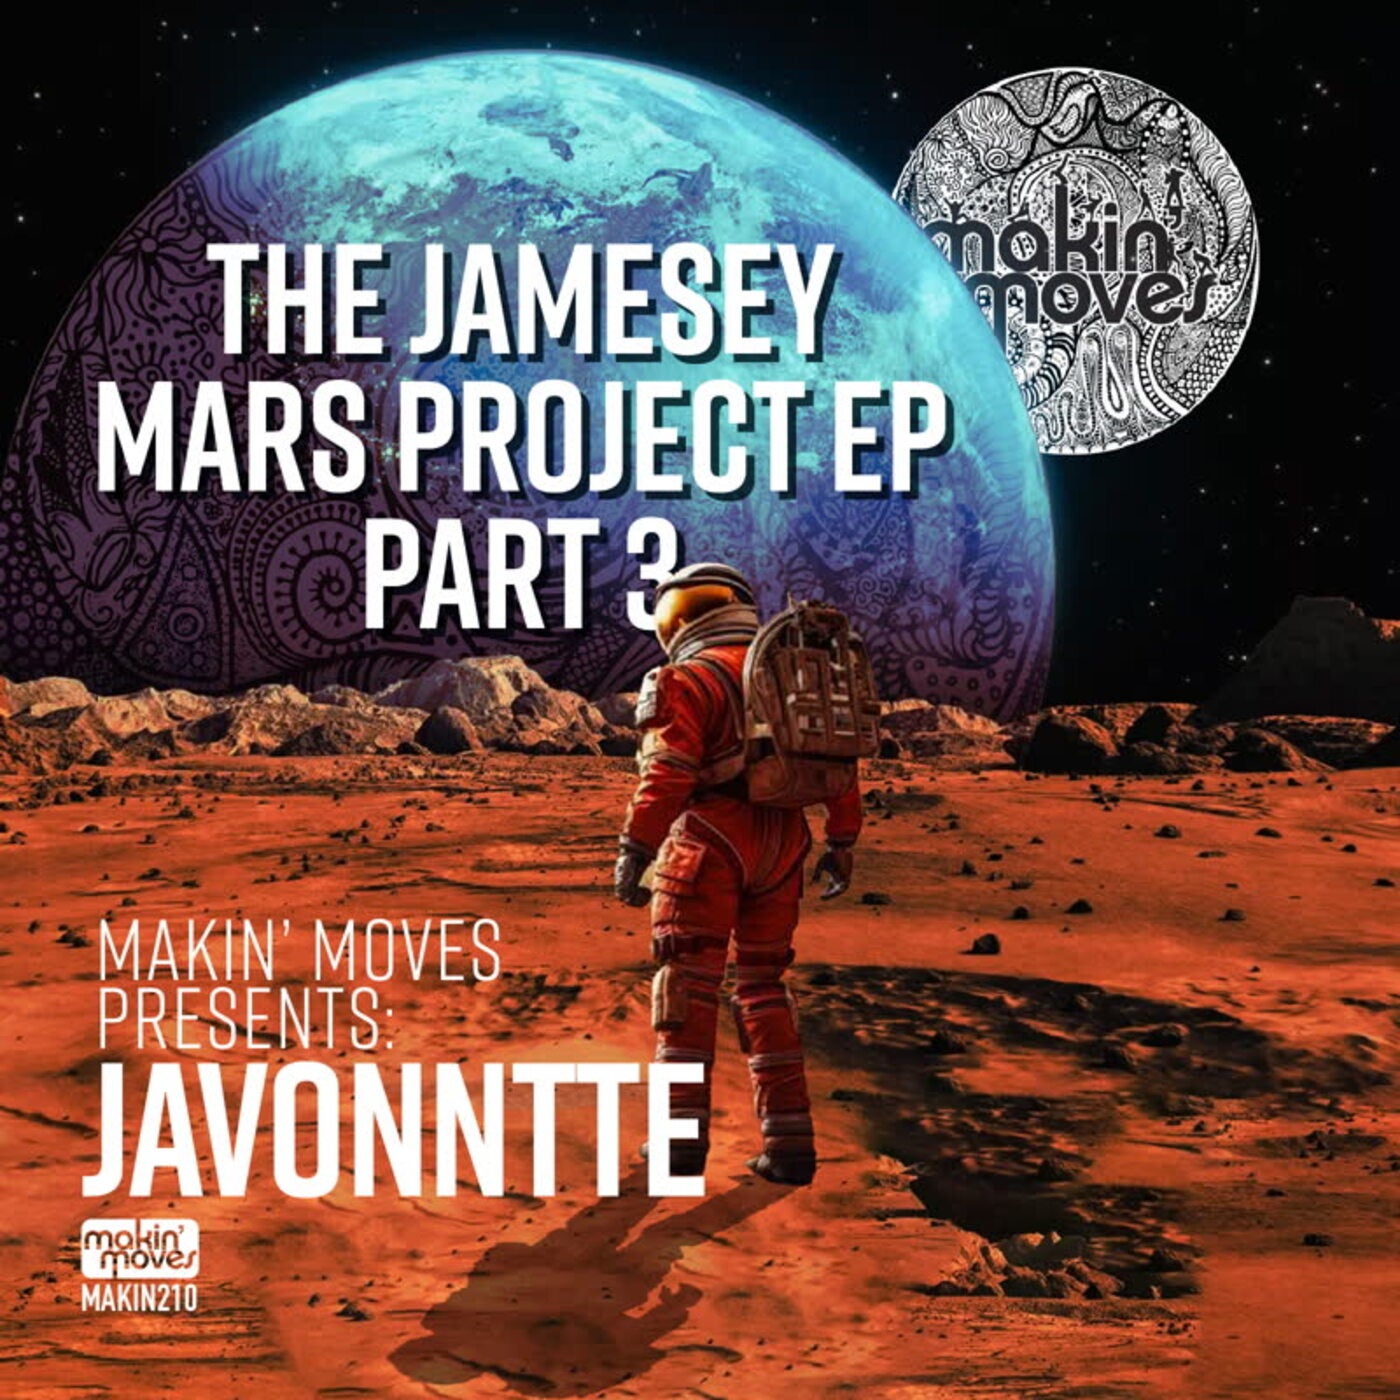 The Jamesey Mars Project EP, Pt. III